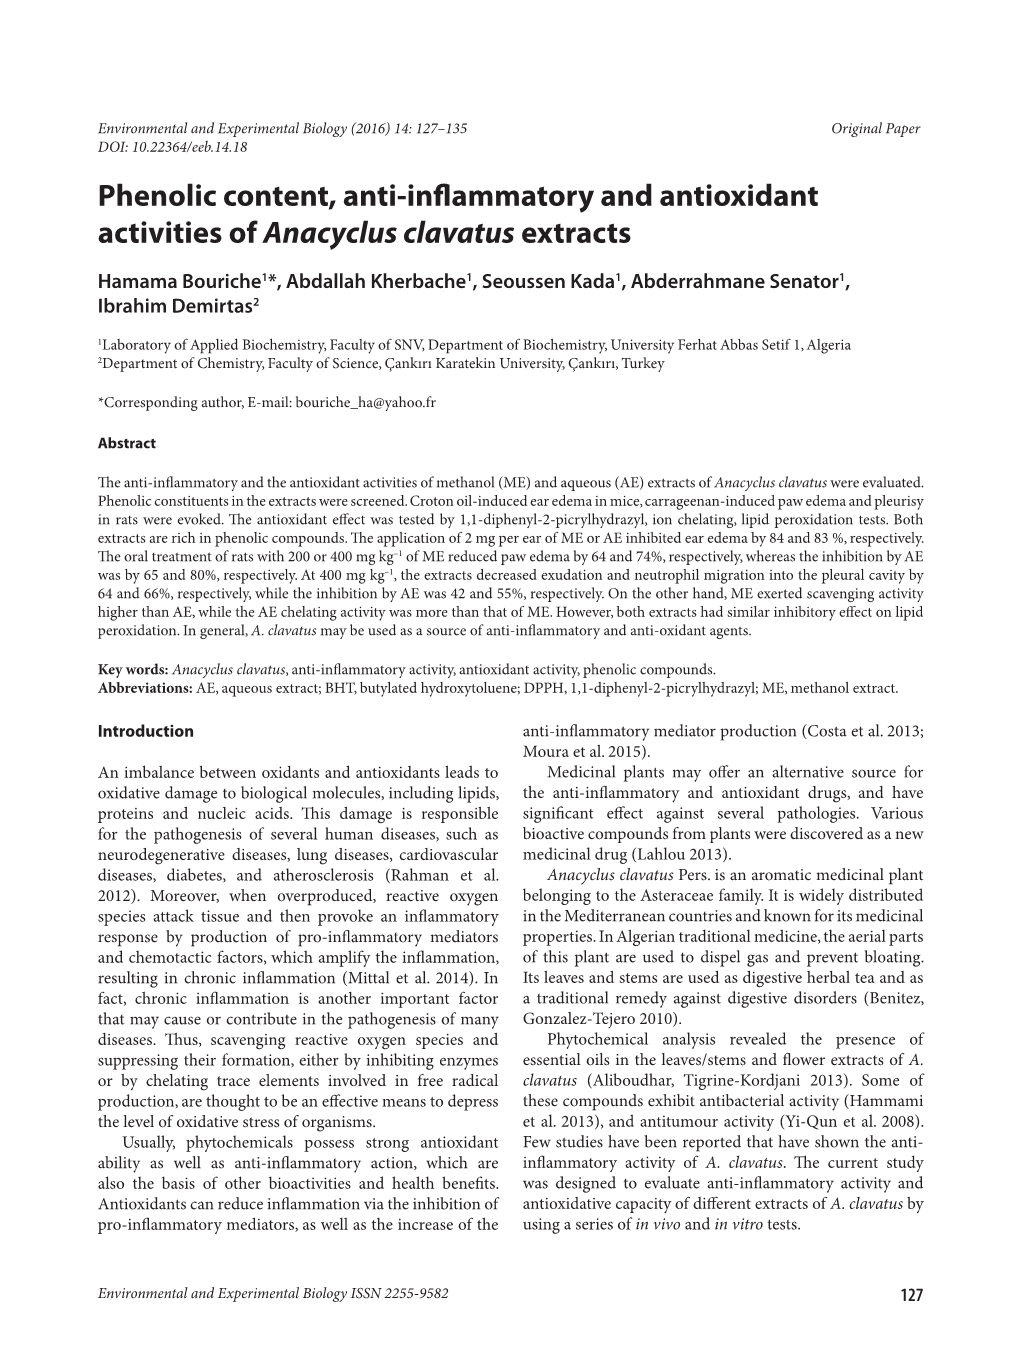 Phenolic Content, Anti-Inflammatory and Antioxidant Activities of Anacyclus Clavatus Extracts